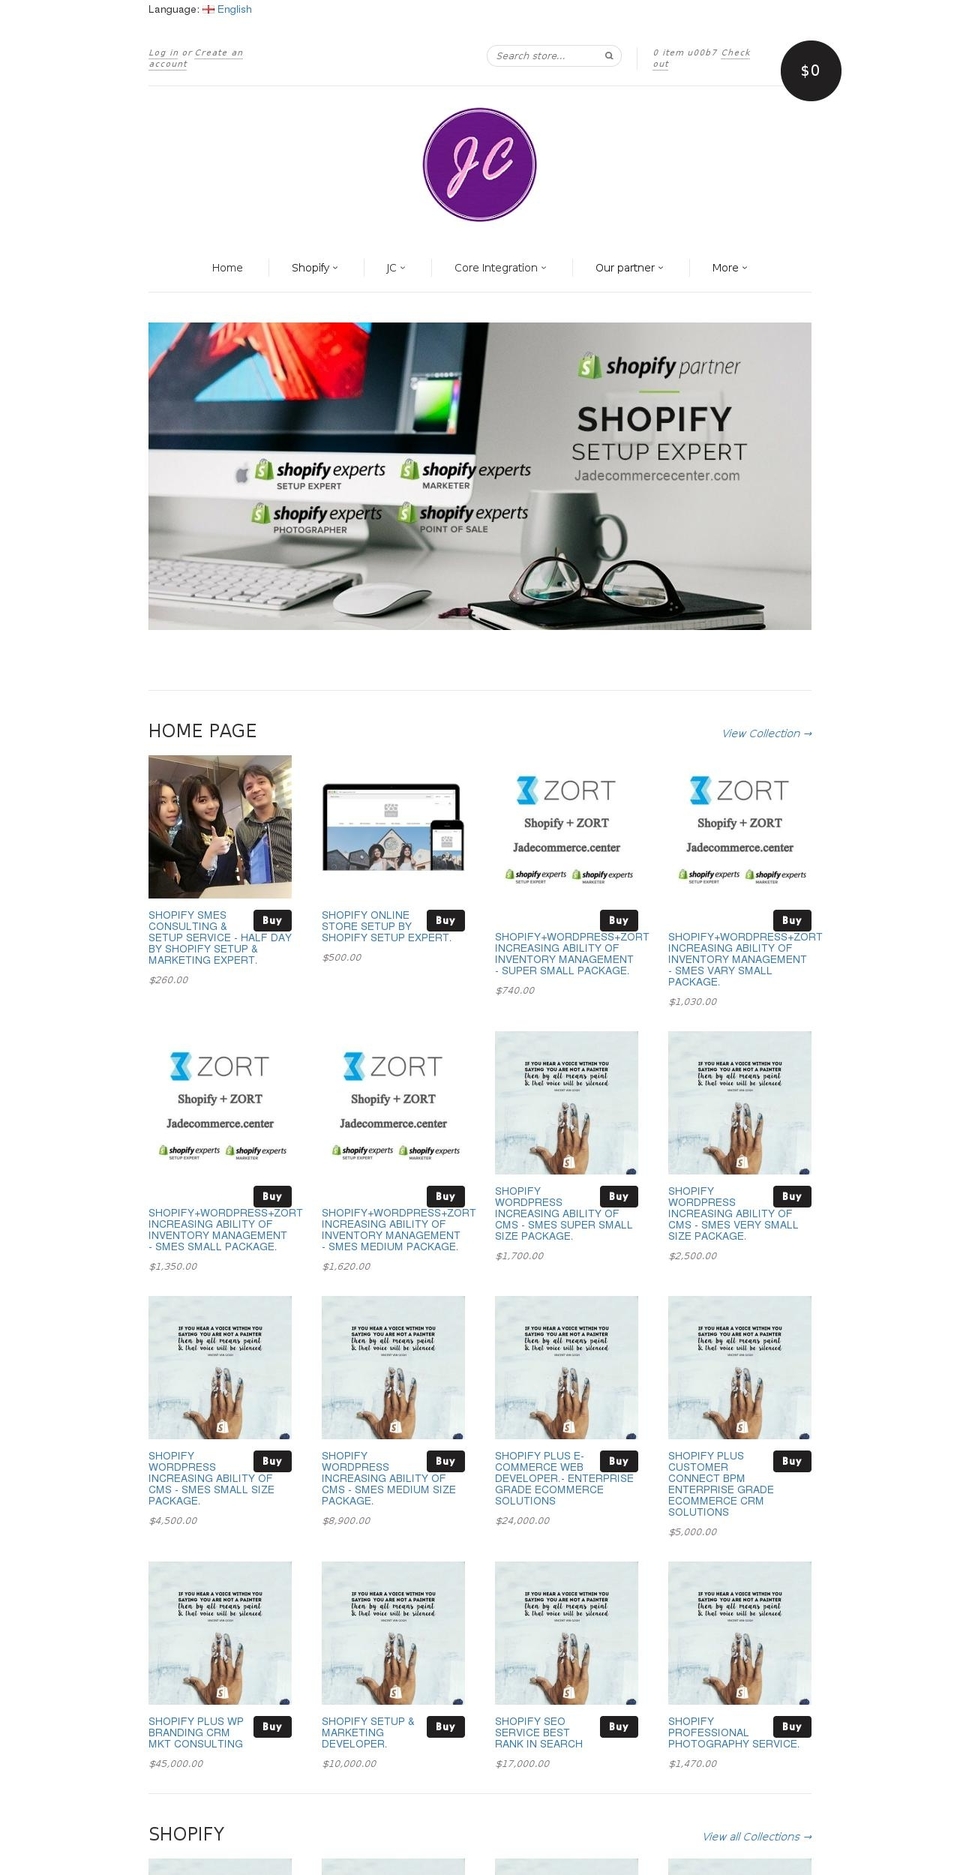 jadecommerce.center shopify website screenshot